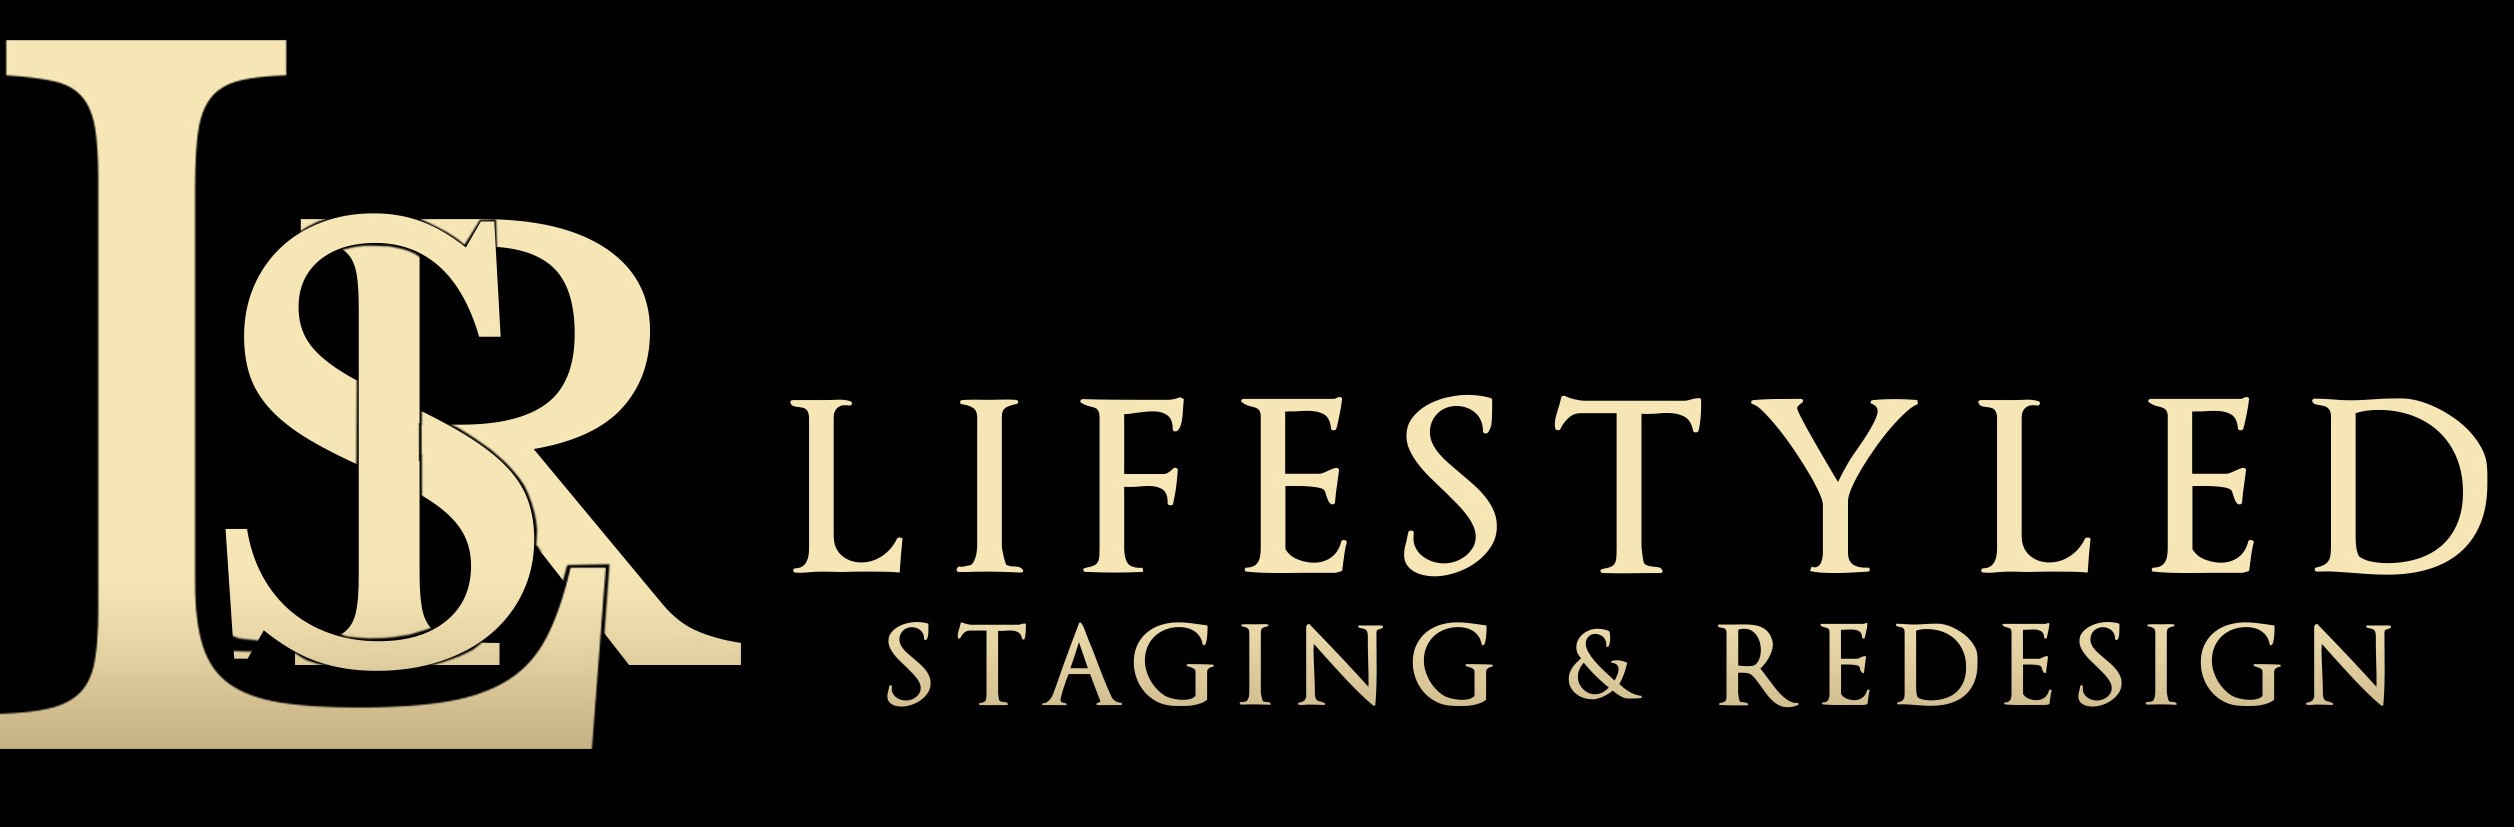 Lifestyled Staging & Redesign, LLC logo